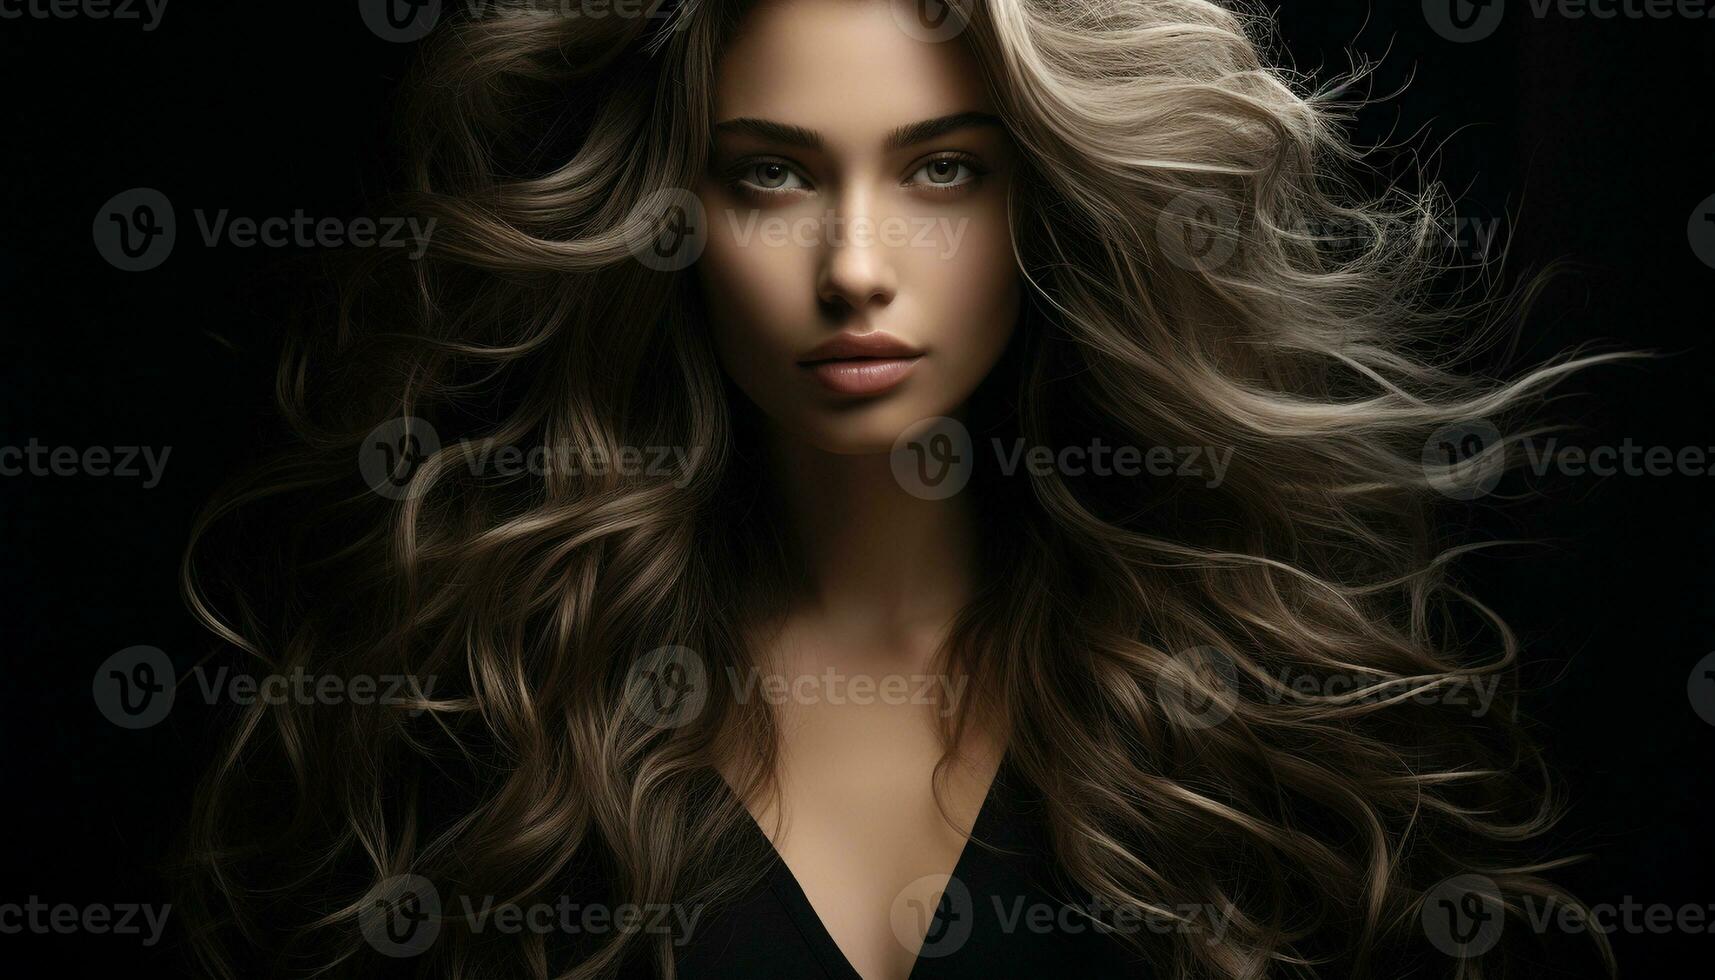 Beautiful woman with long curly hair, looking sensually at camera generated by AI photo